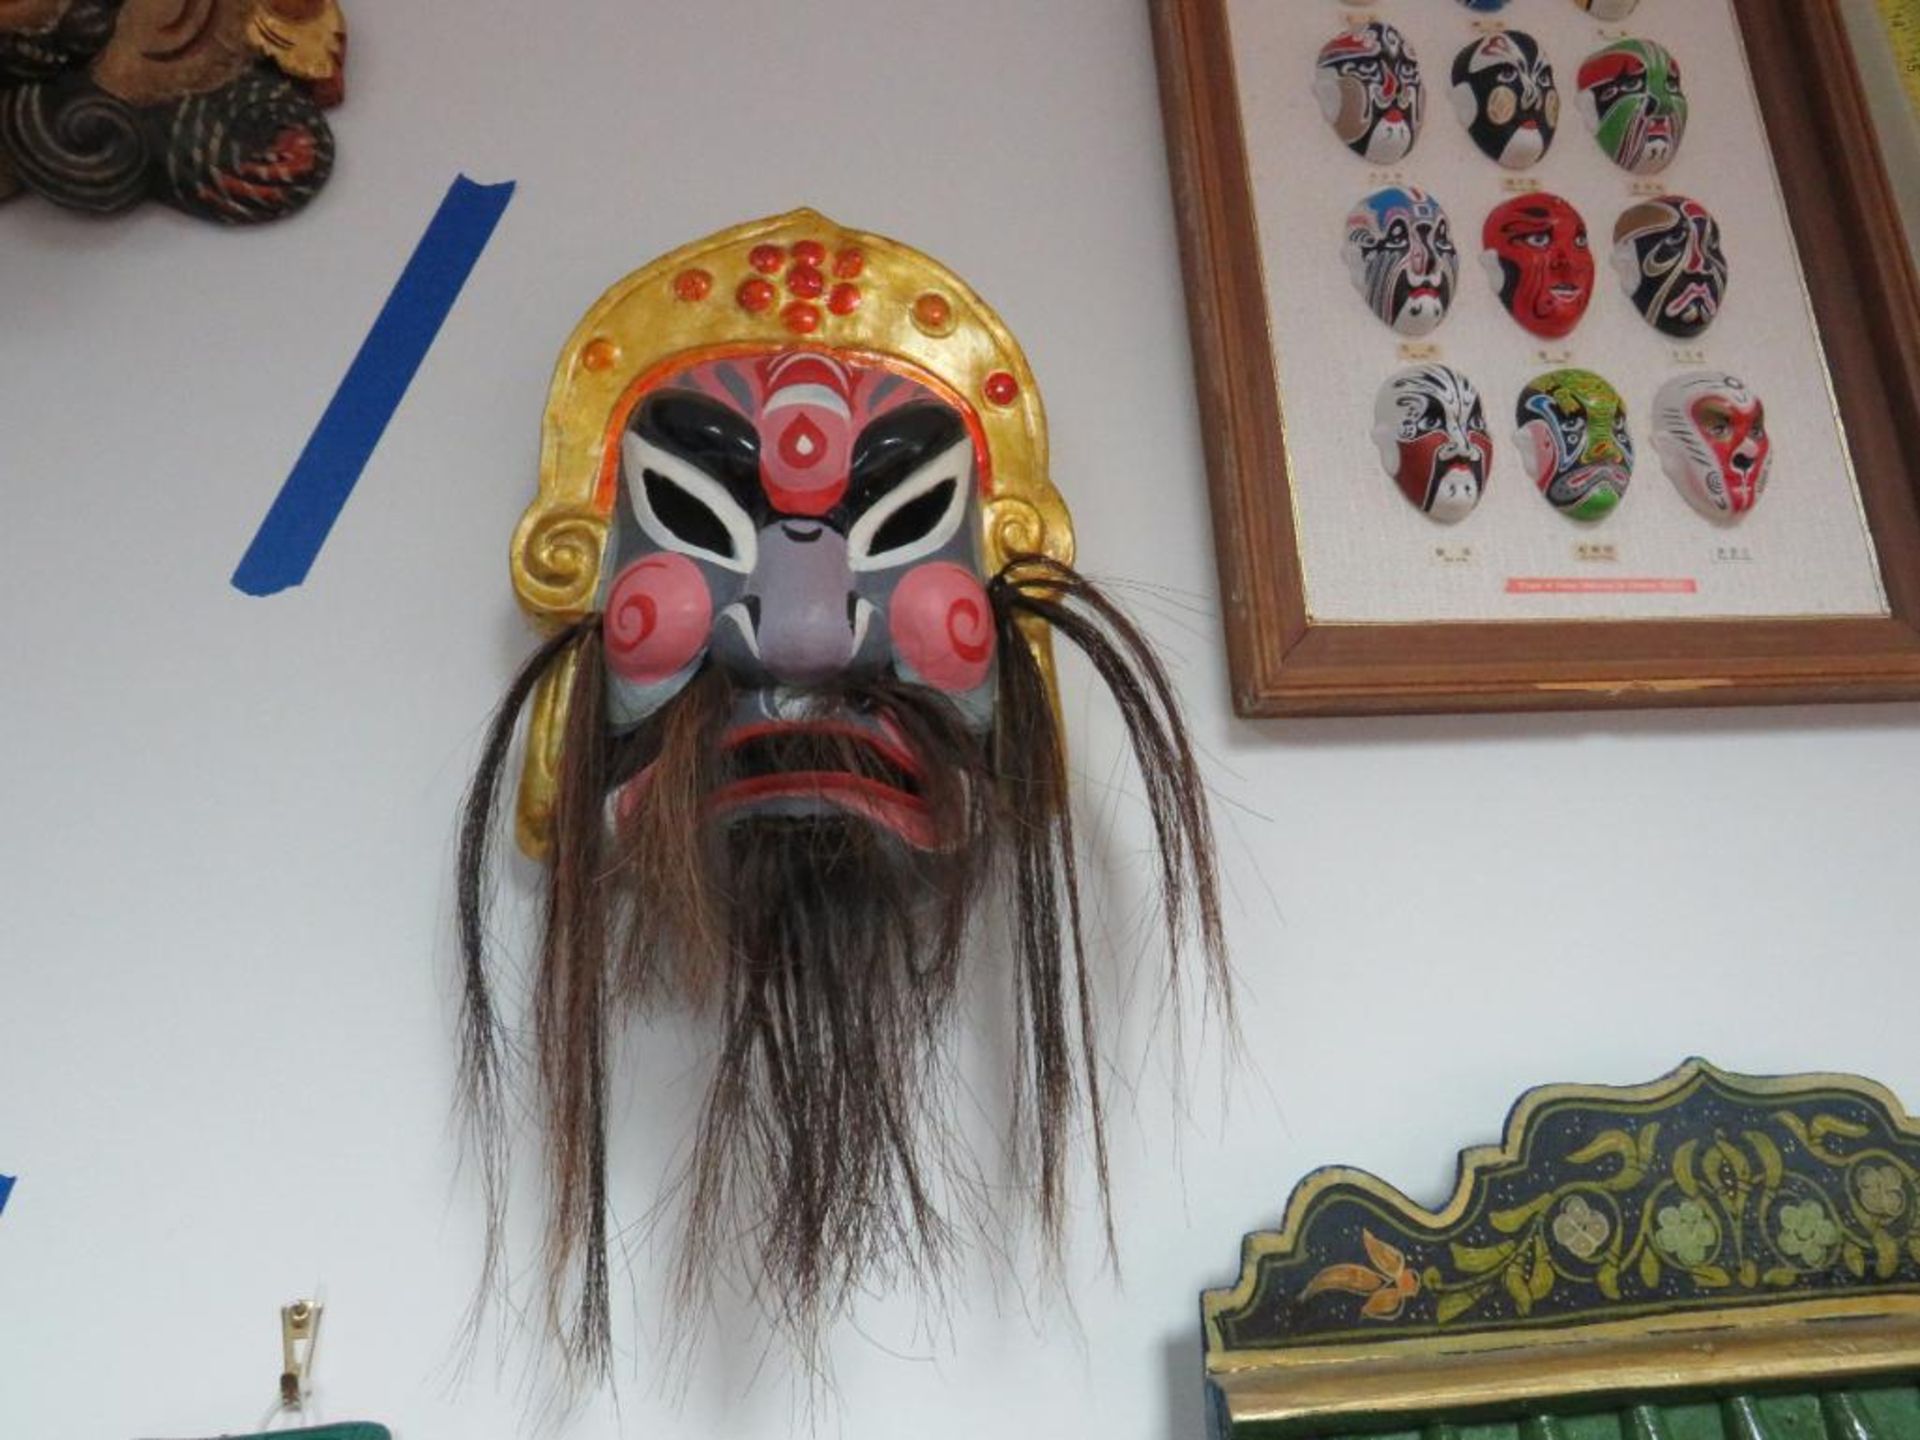 Lot c/o: (3) Tribal Masks and (2) Hanging Wall Decor. - Image 3 of 6